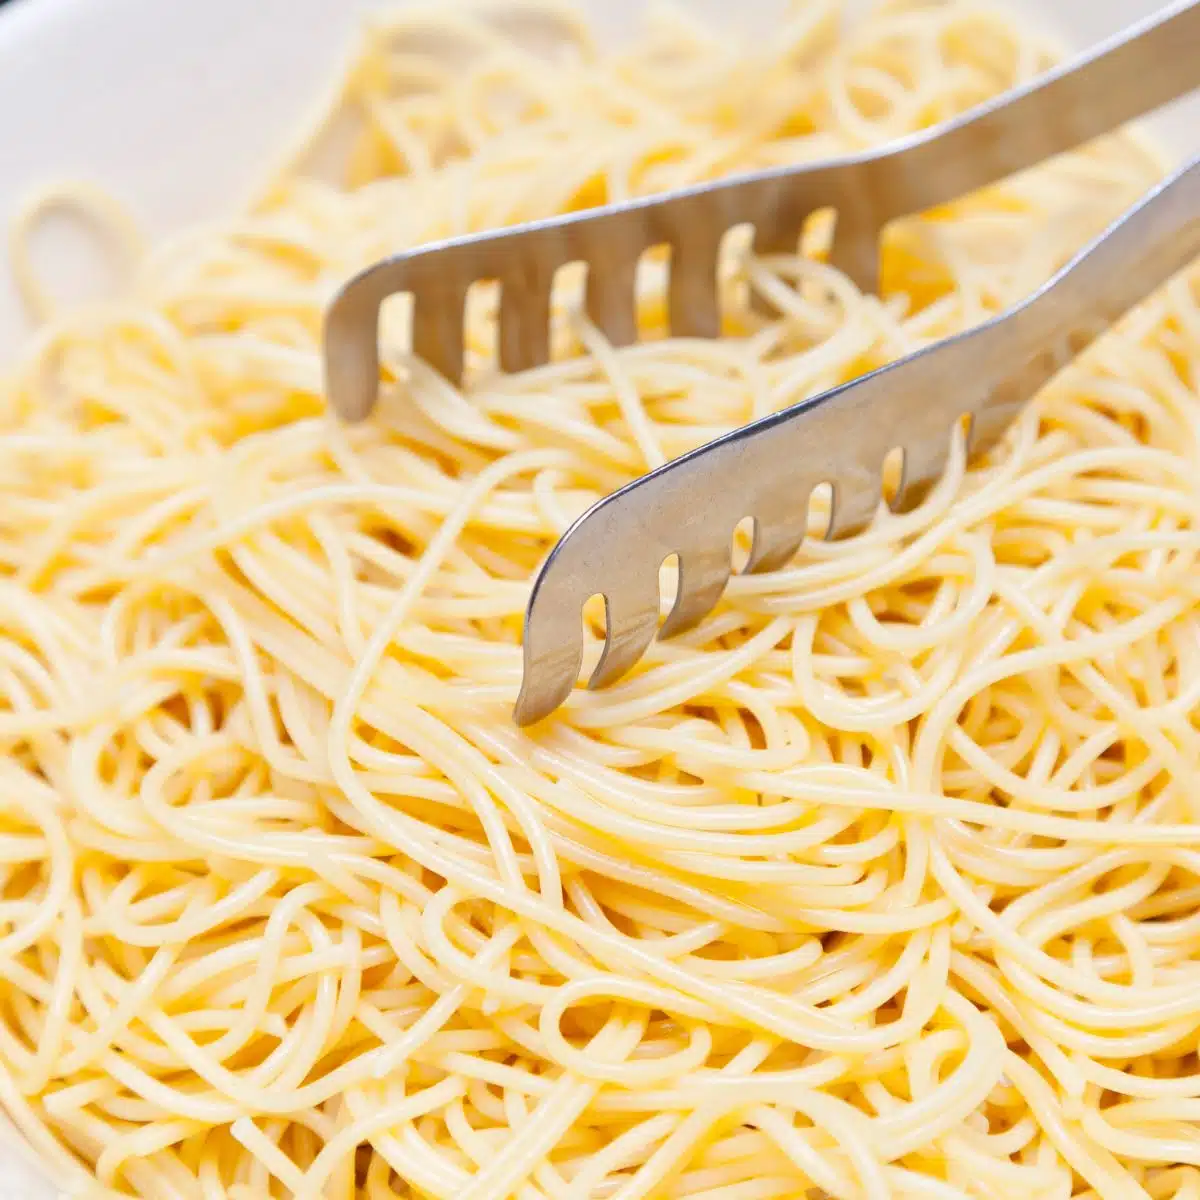 Square image of spaghetti noodles.